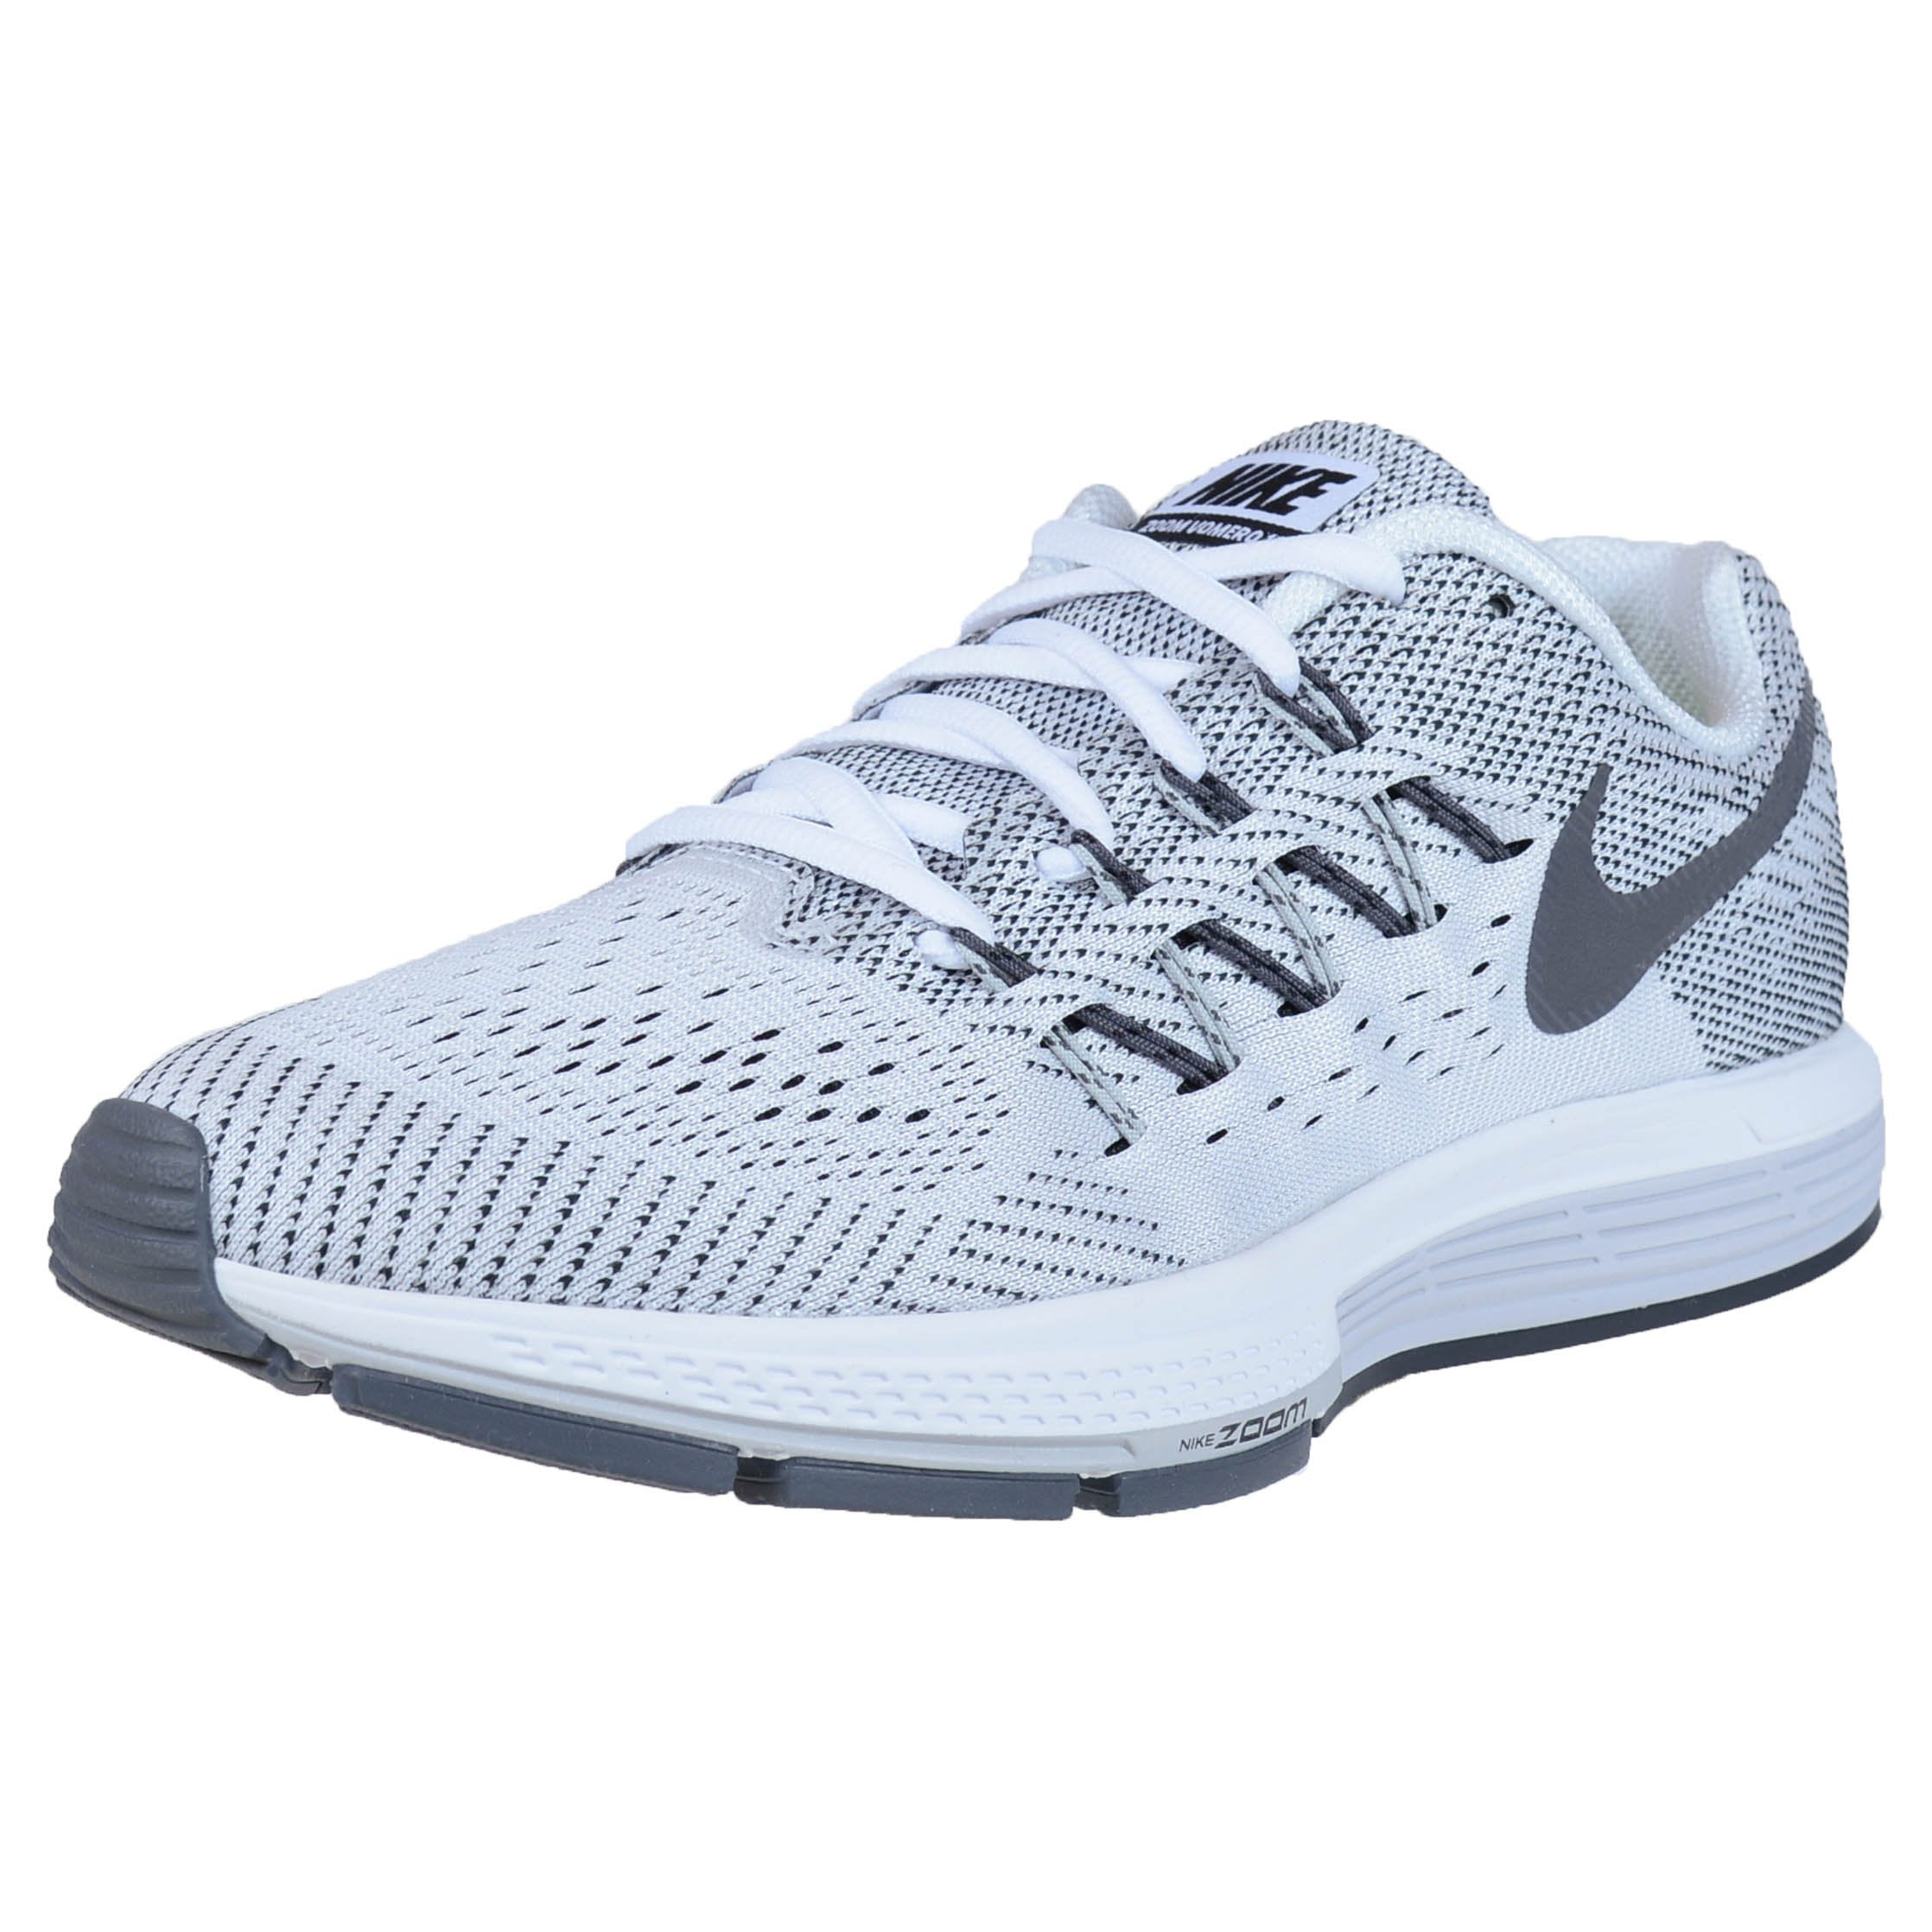 Unassigned - Nike Women's Air Zoom Vomero 10 Running Shoe - Walmart.com ...